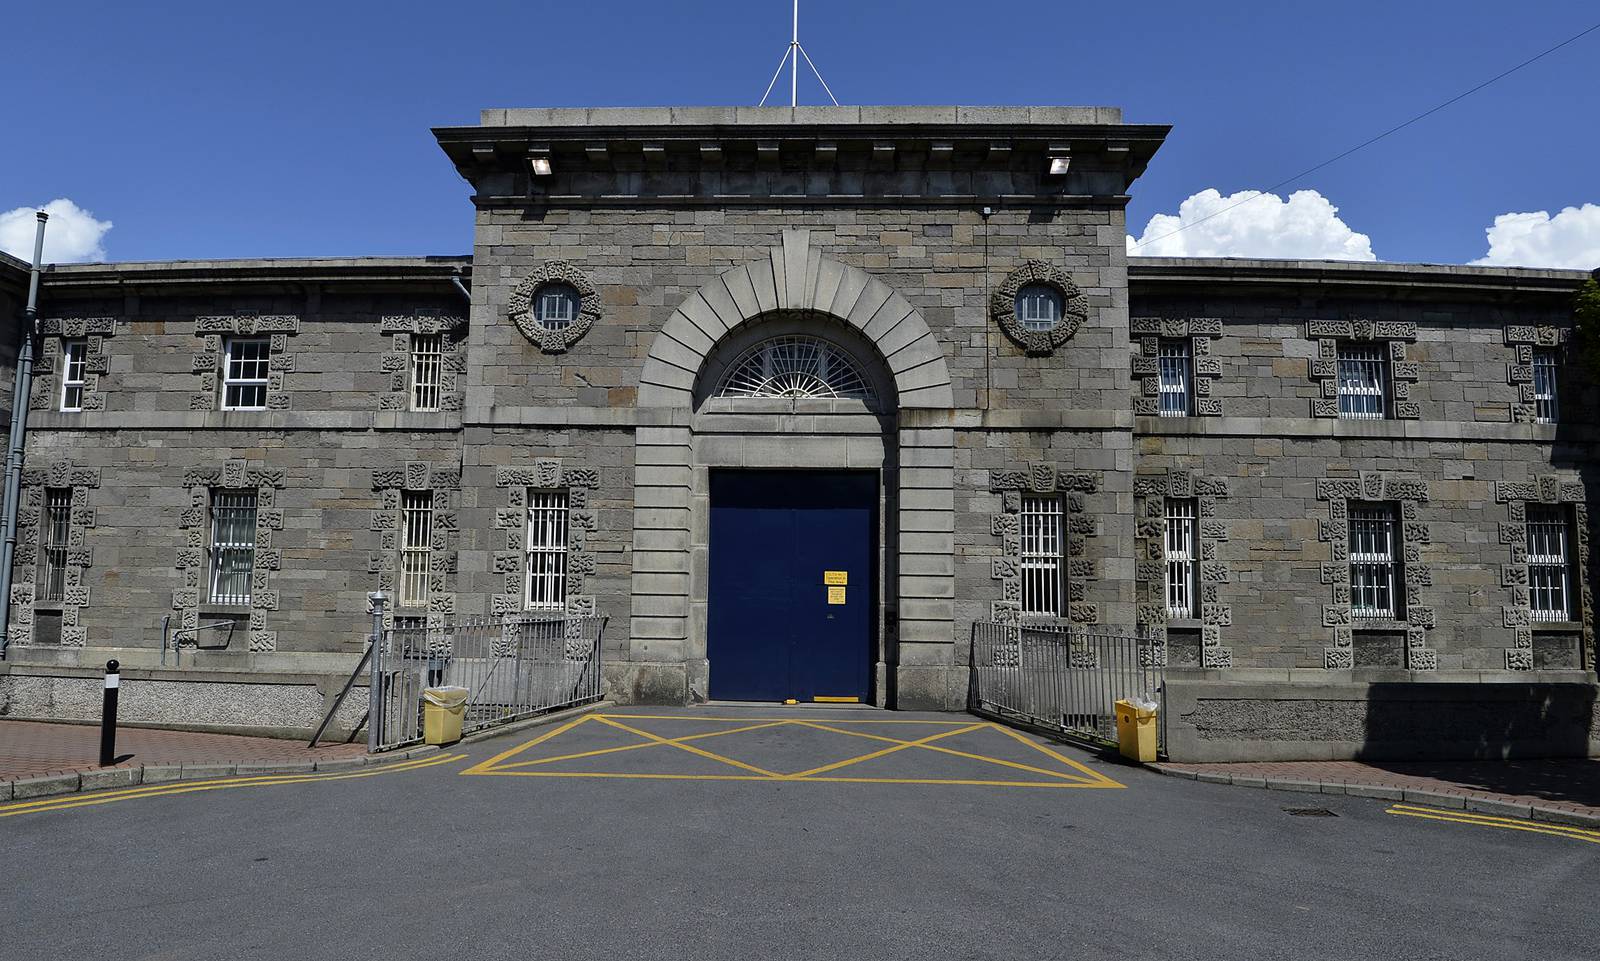 28/06/2012 - News -  The Main enterance to Mountjoy Prison - general View - Stock Photo - GV - 
Photo: David Sleator/THE IRISH TIMES